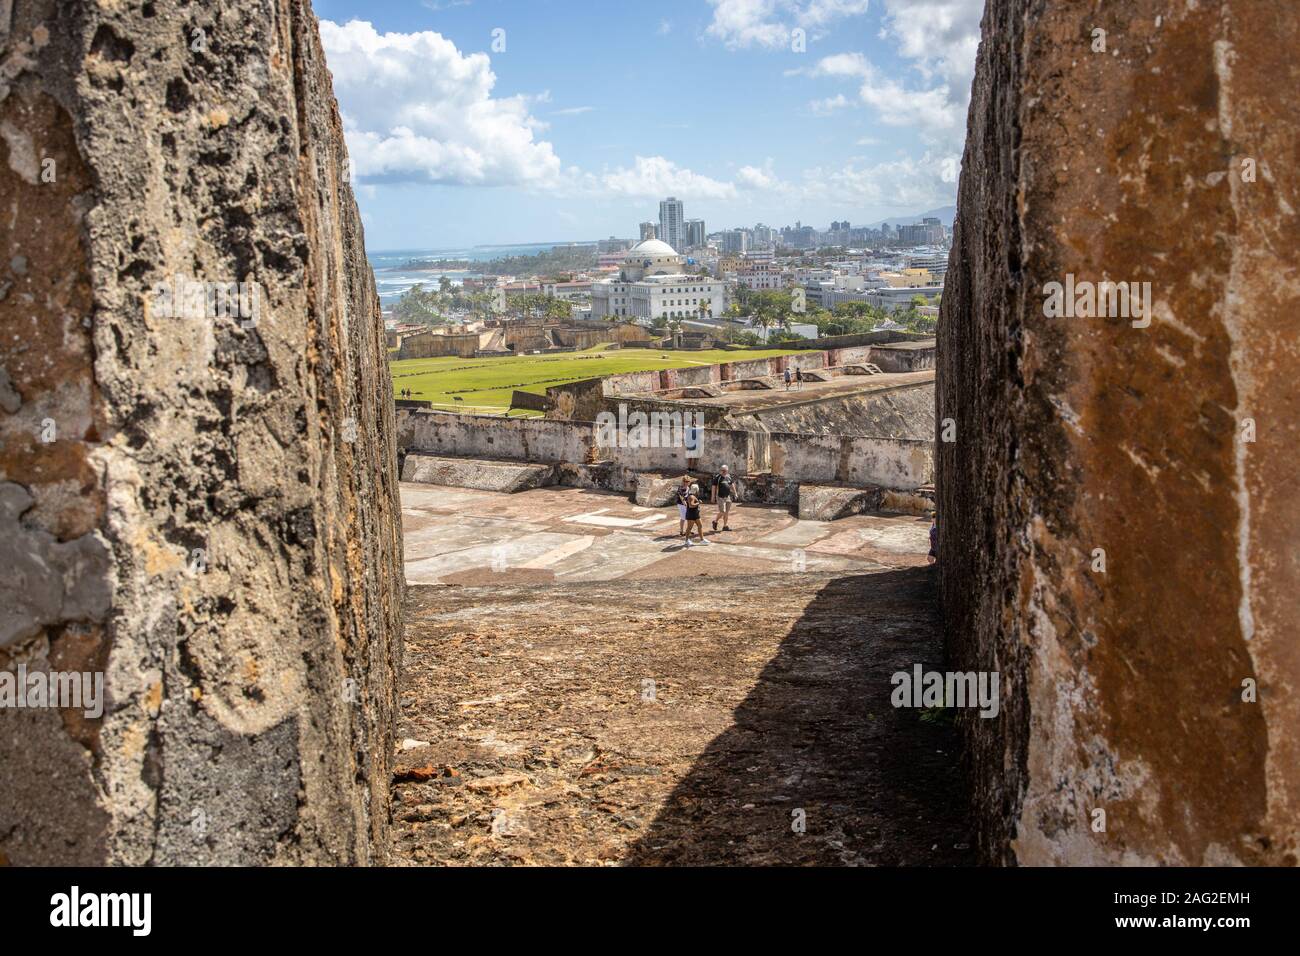 Tourists on the walls o,f San Cristobal Castle, El Capitolio, San Juan, Puerto Rico Stock Photo